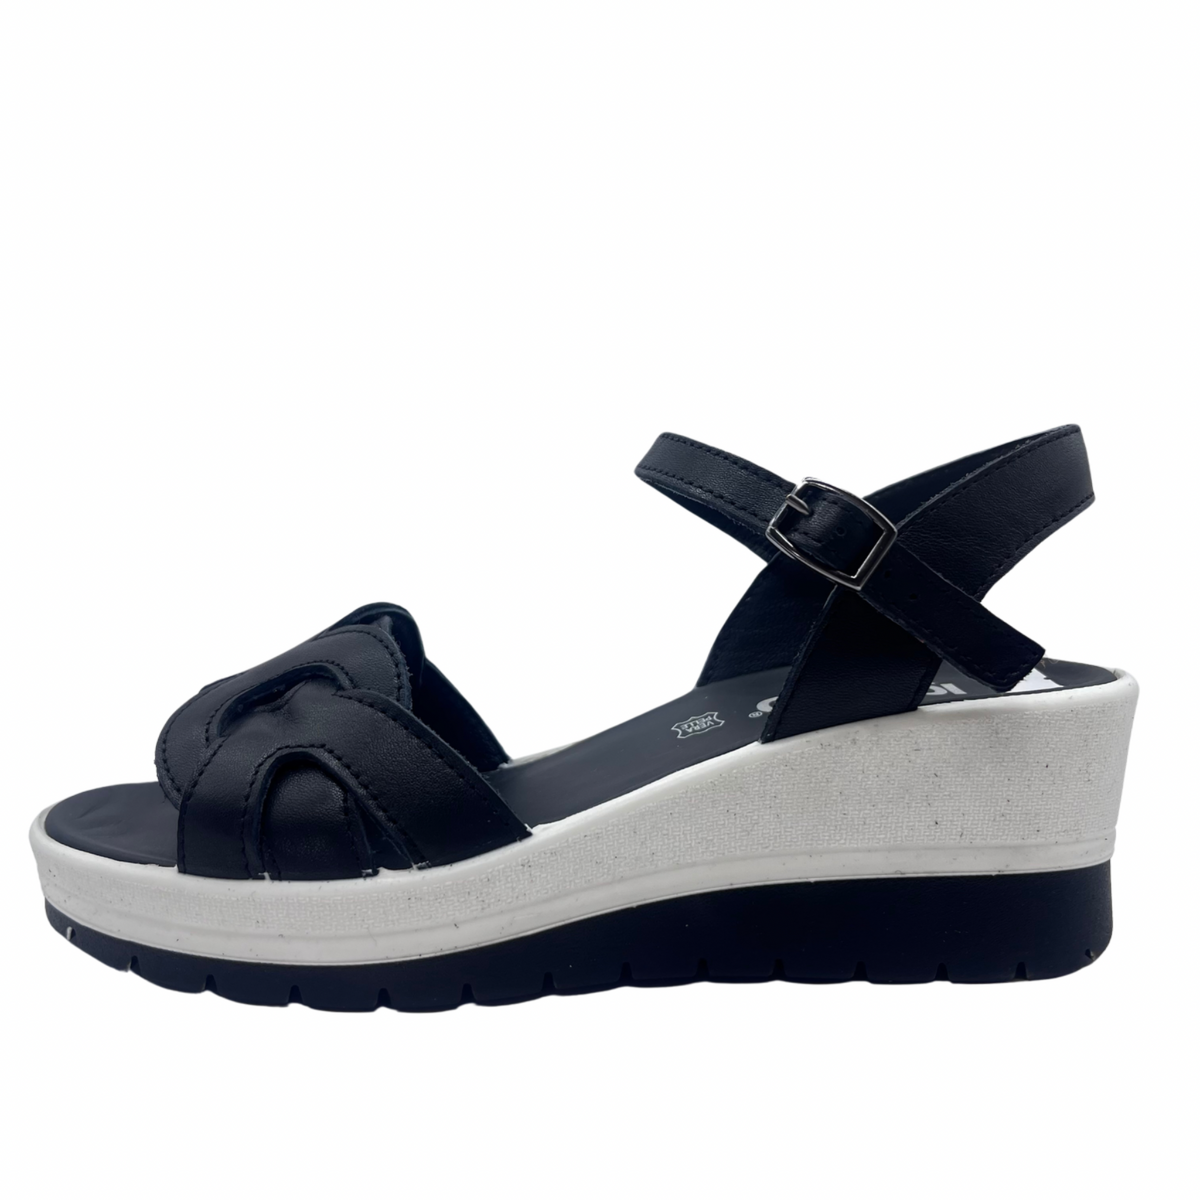 Igi &amp; Co Black and White Leather Wedge Sandal